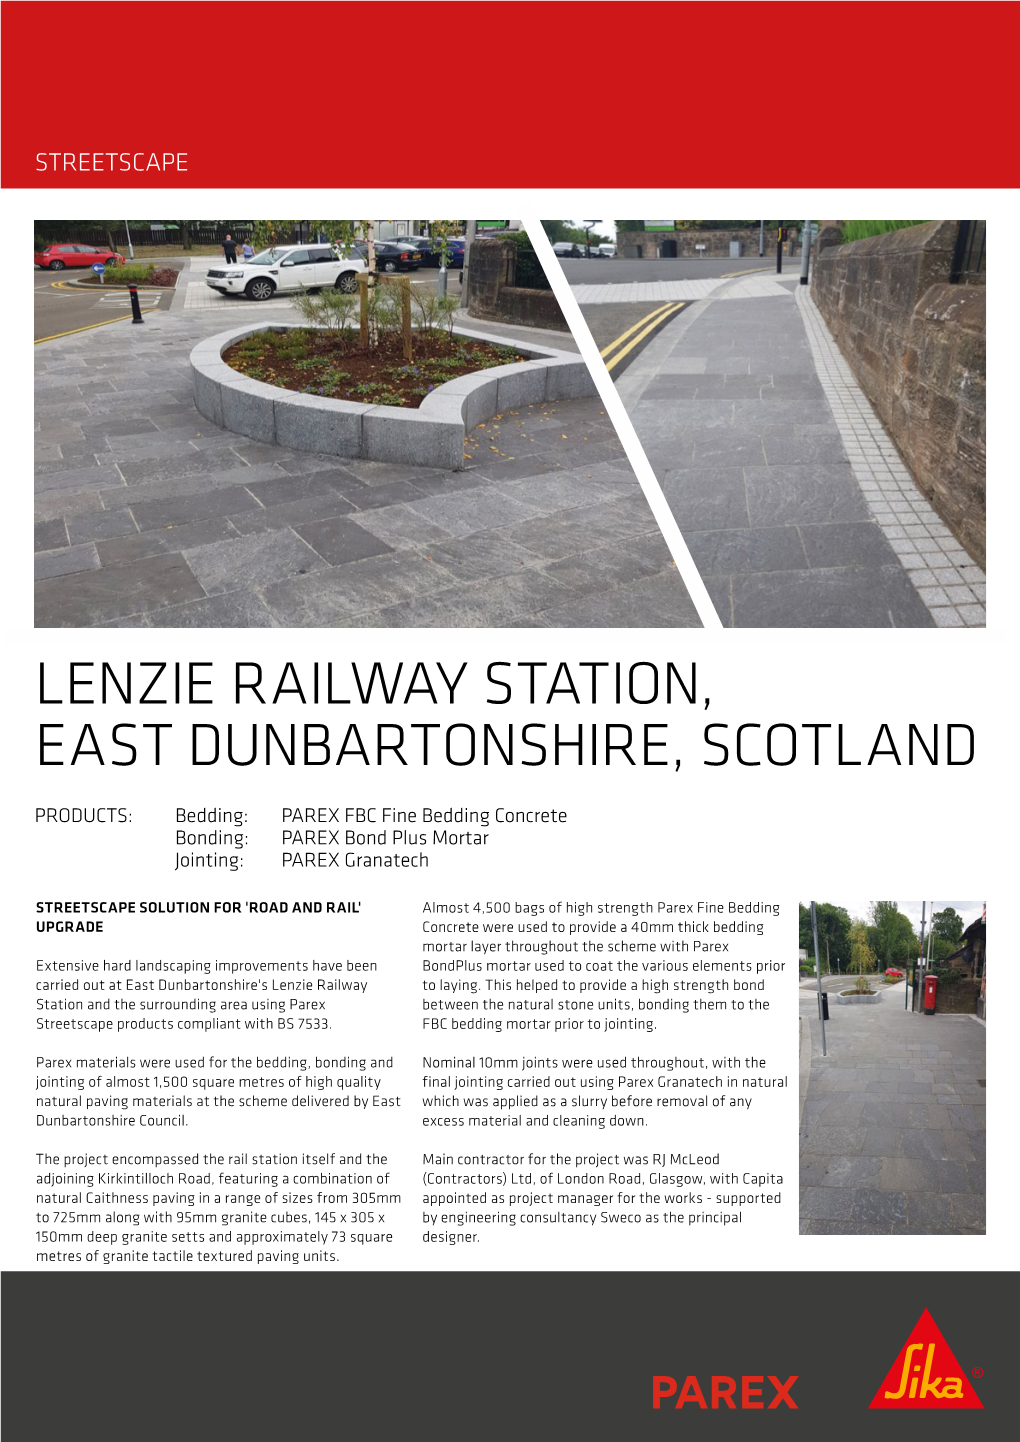 Lenzie Railway Station, East Dunbartonshire, Scotland